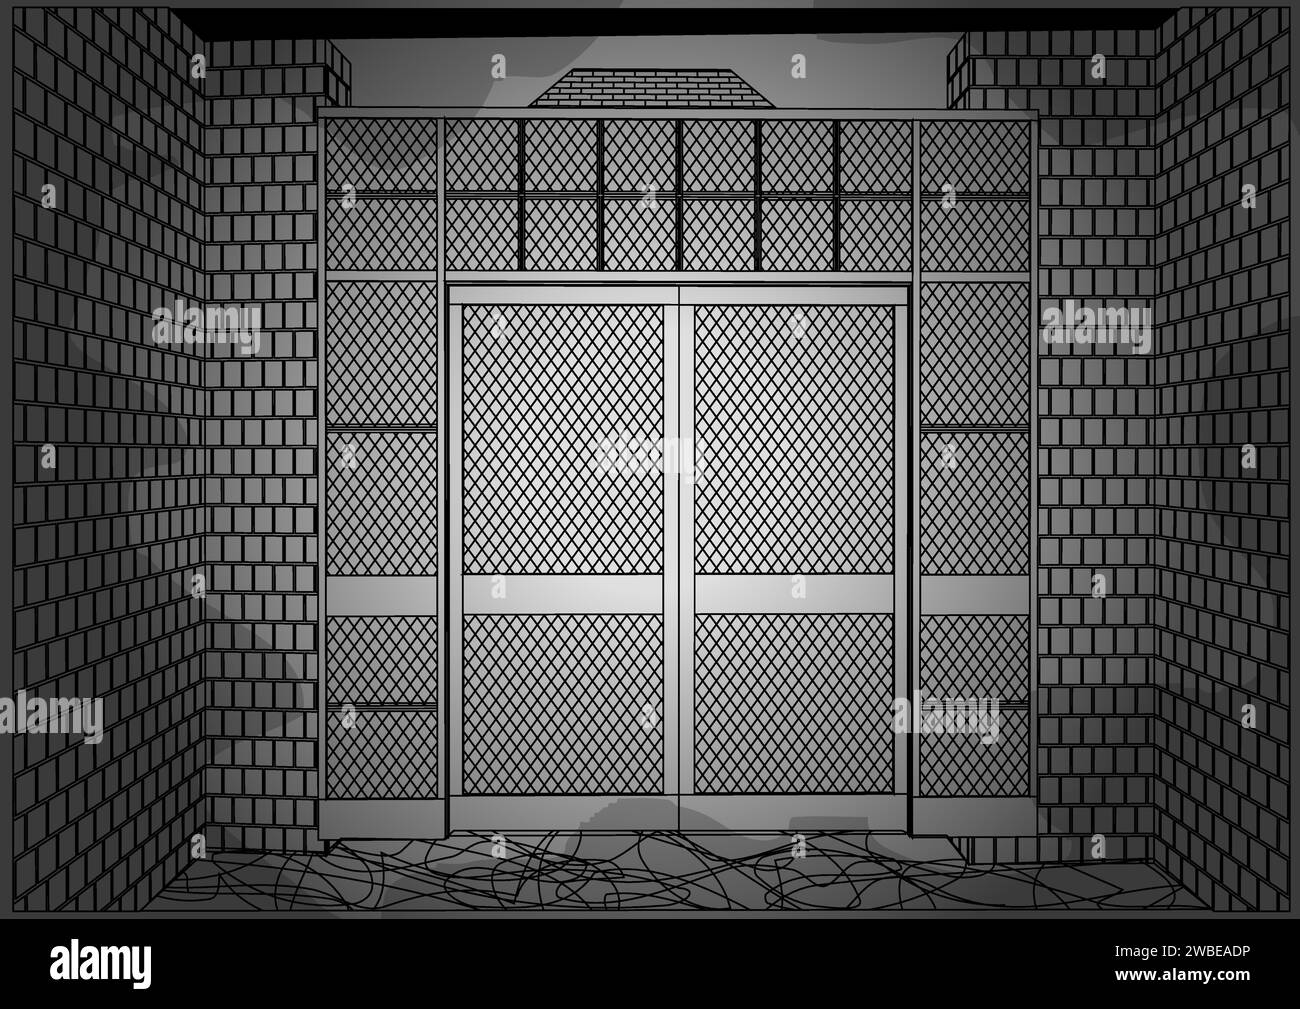 prison abstract illustration building interior Stock Vector